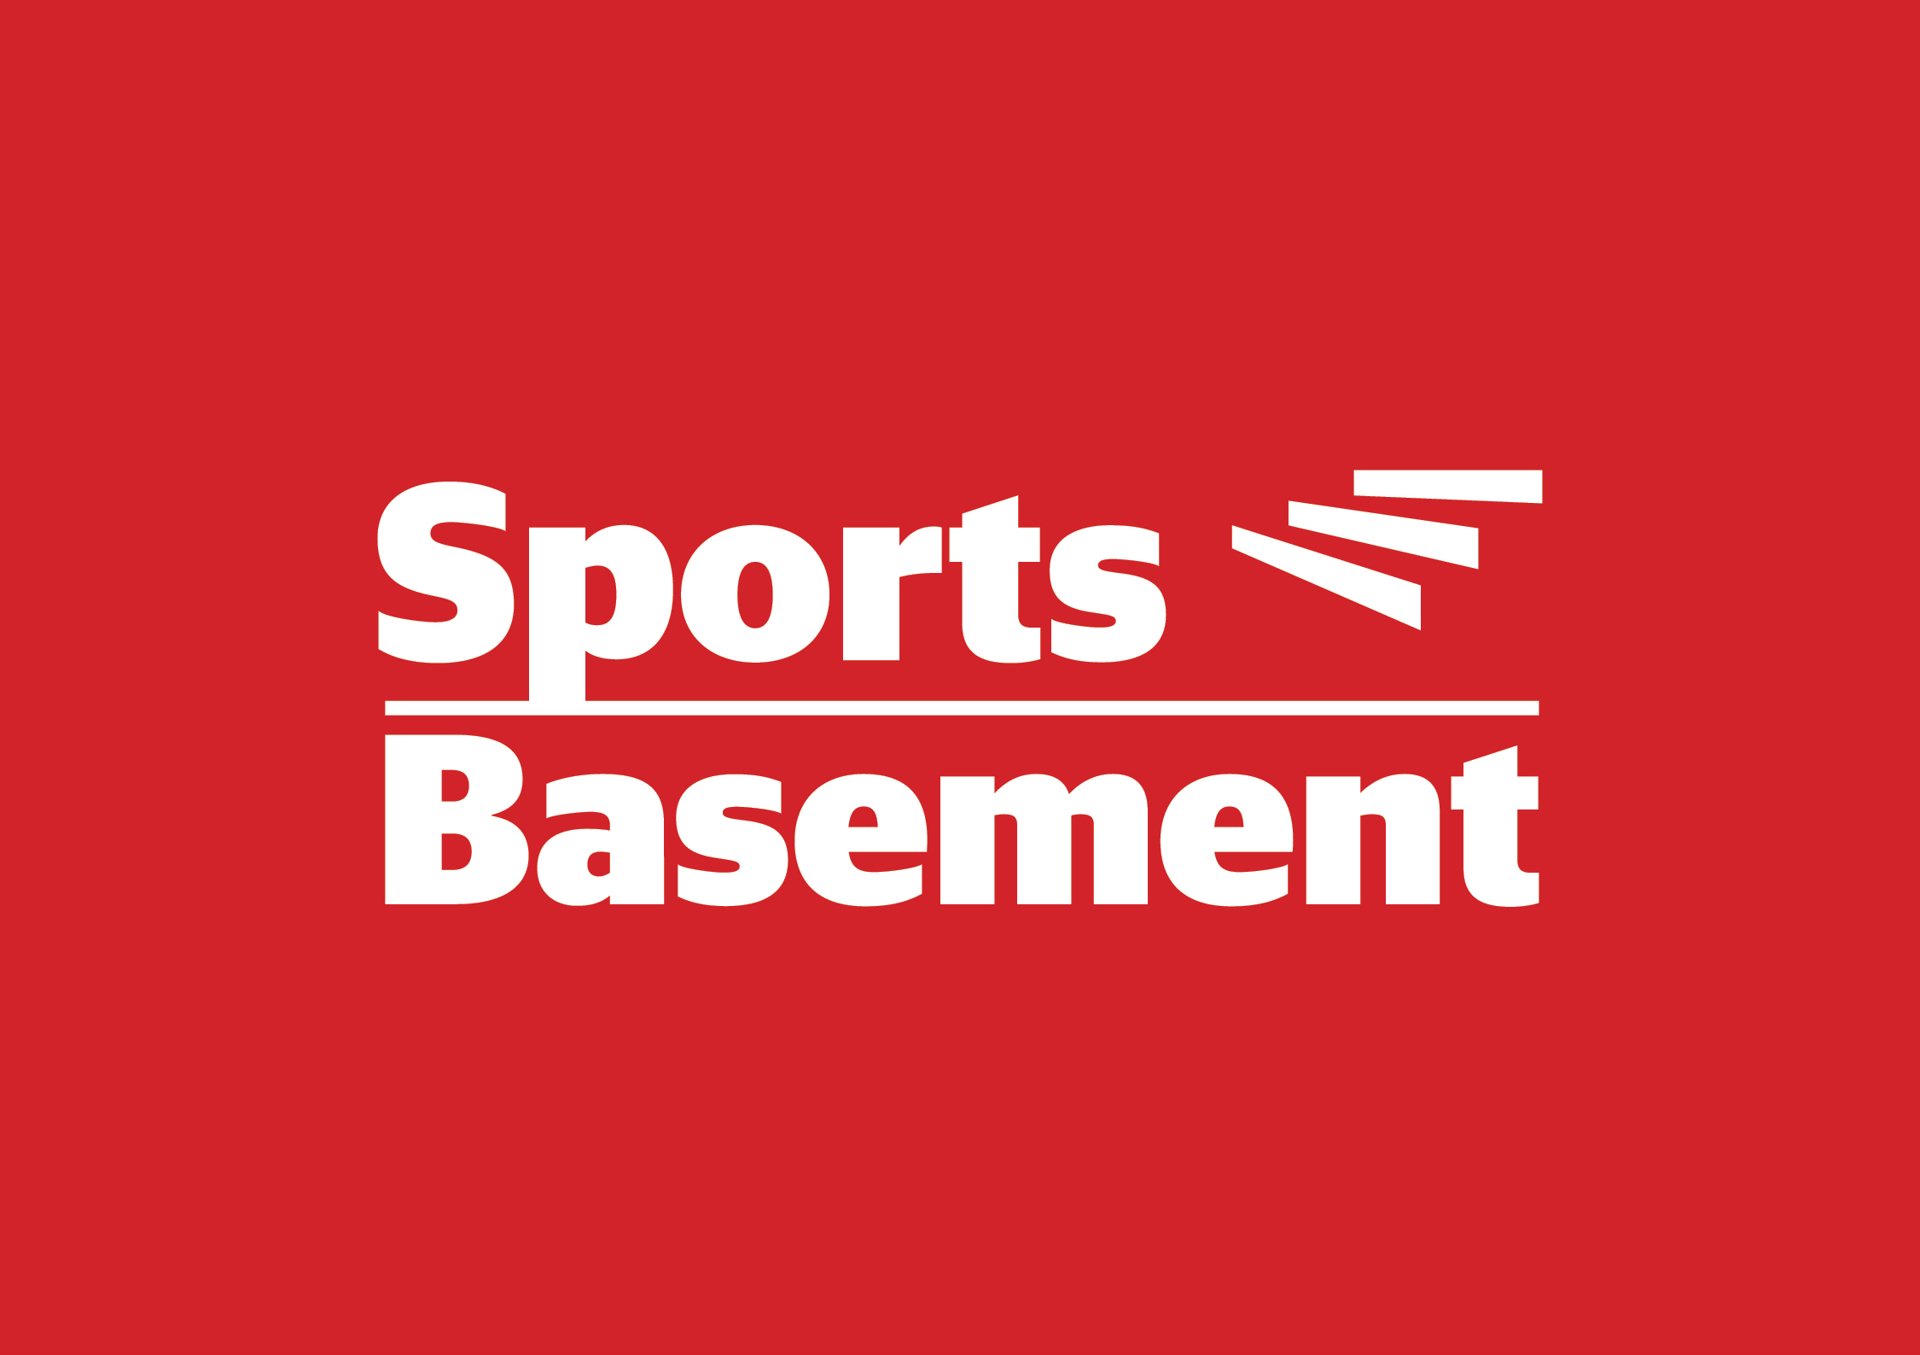 Sports basement logo